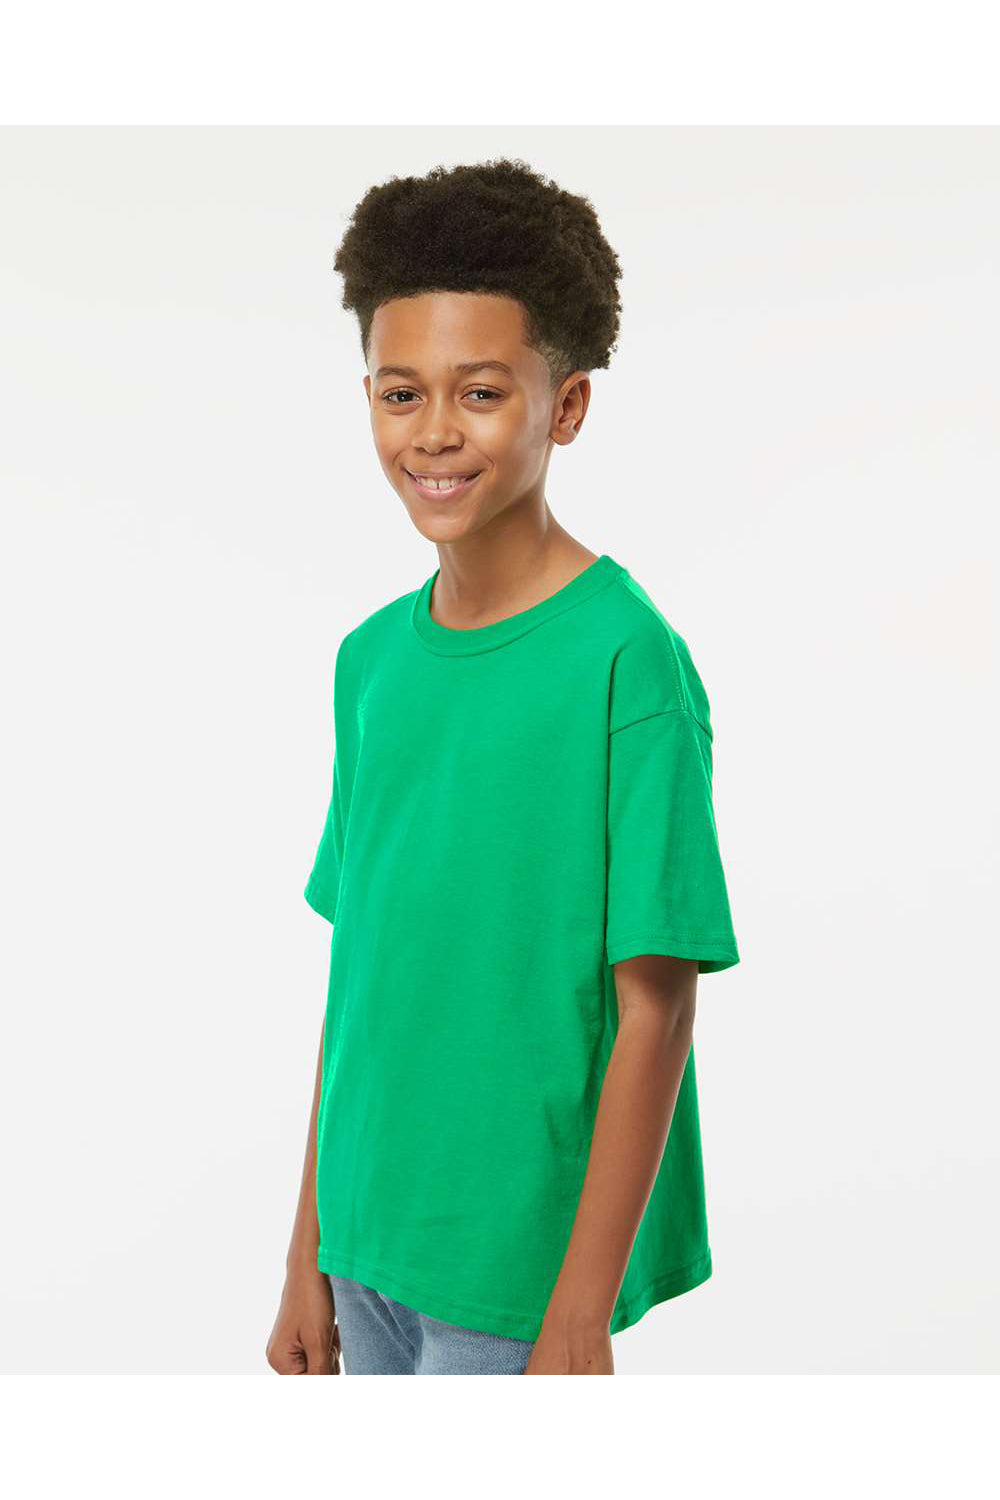 M&O 4850 Youth Gold Soft Touch Short Sleeve Crewneck T-Shirt Irish Green Model Side